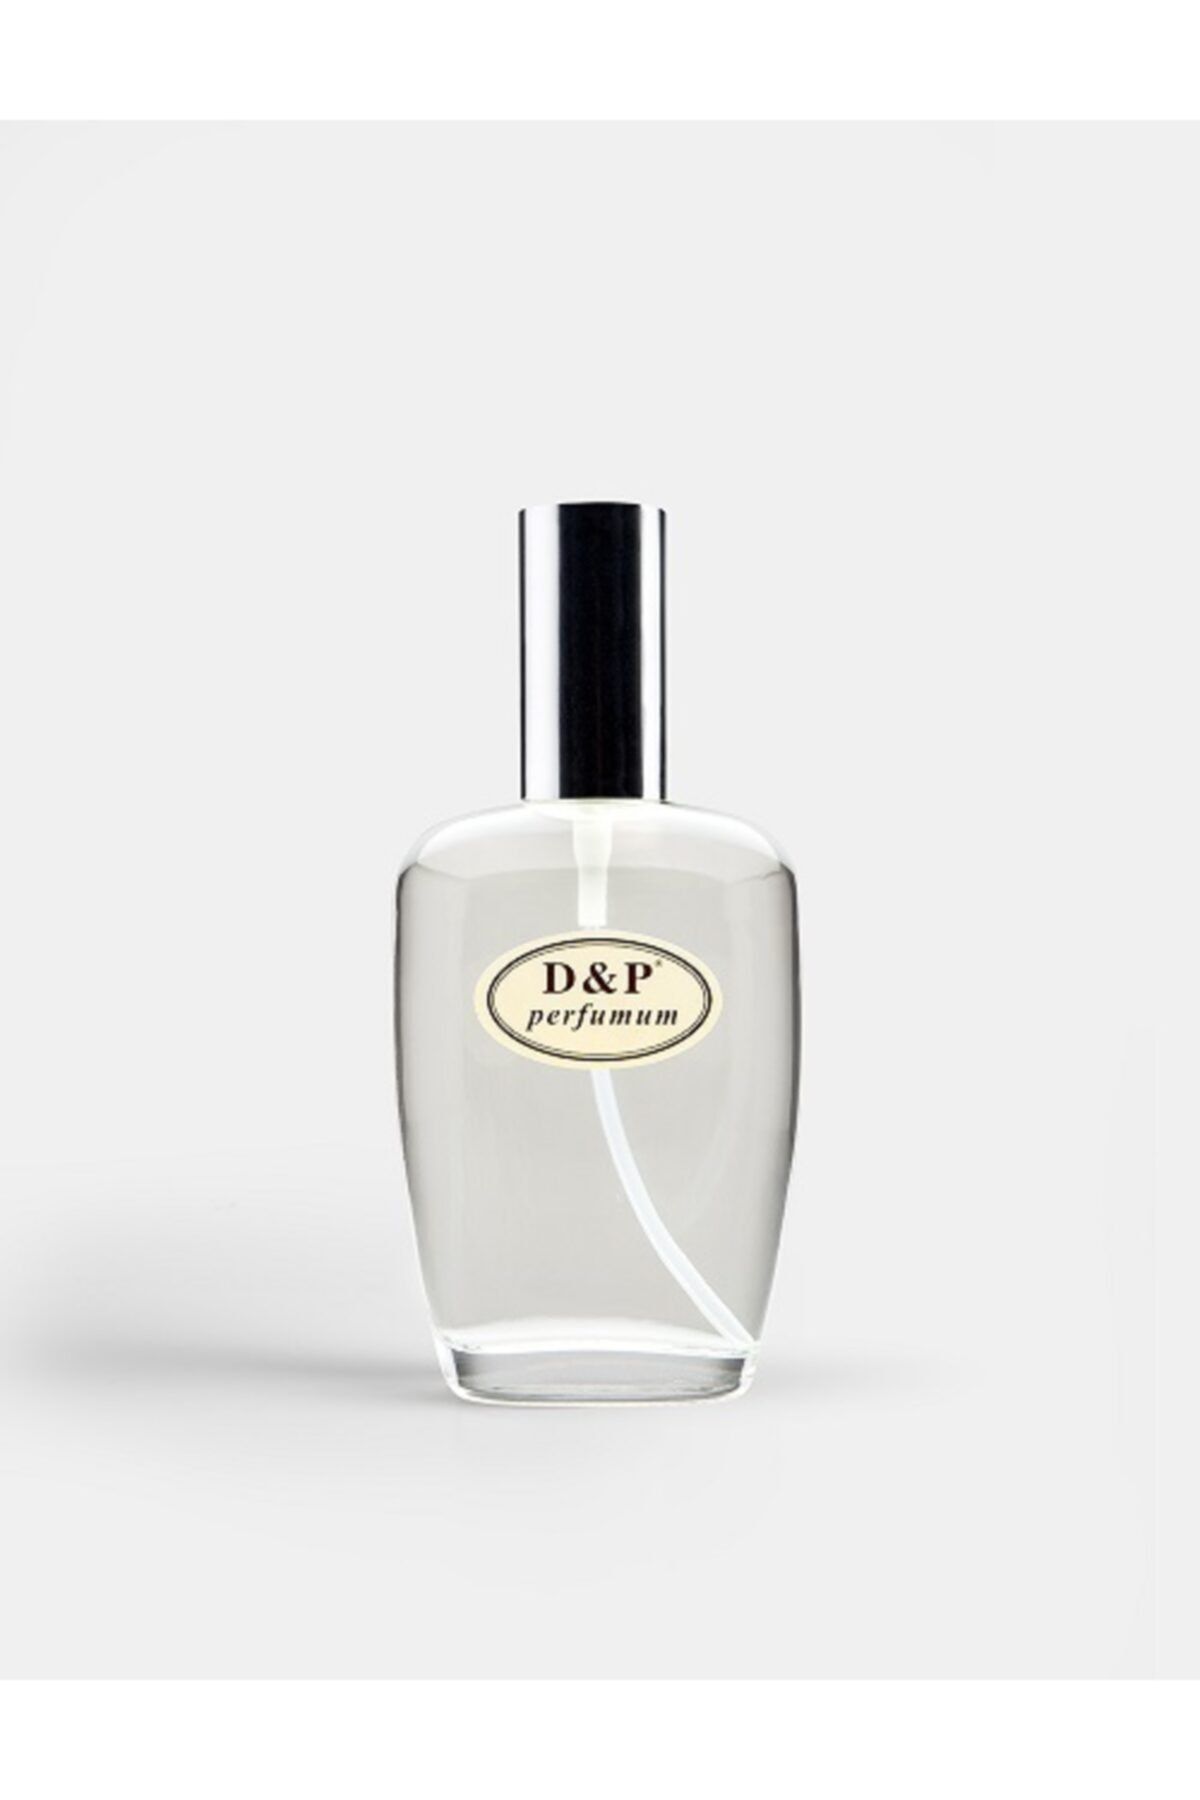 D&P Perfumum E9 Kadın Parfüm 100 ml